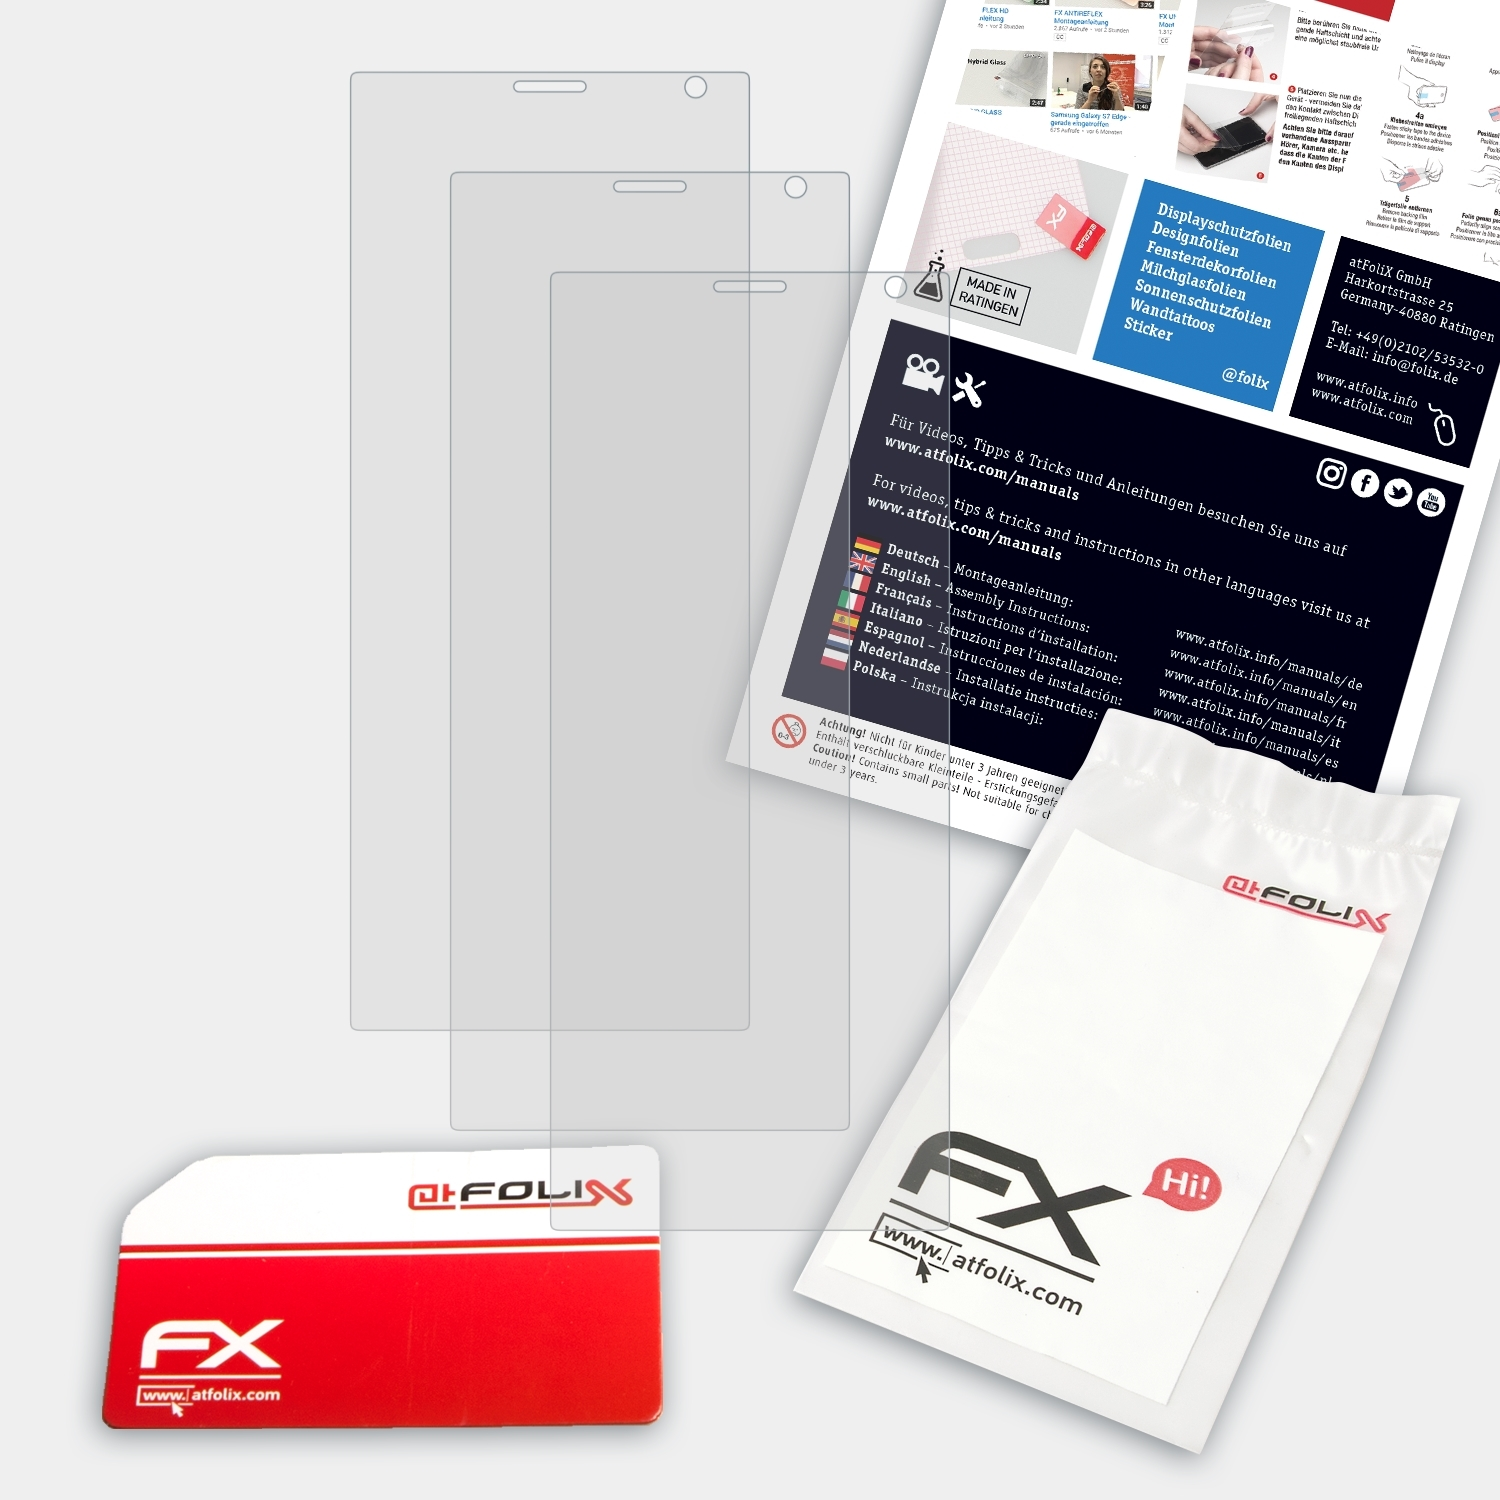 Plus) FX-Antireflex Xperia Displayschutz(für 3x Sony 10 ATFOLIX